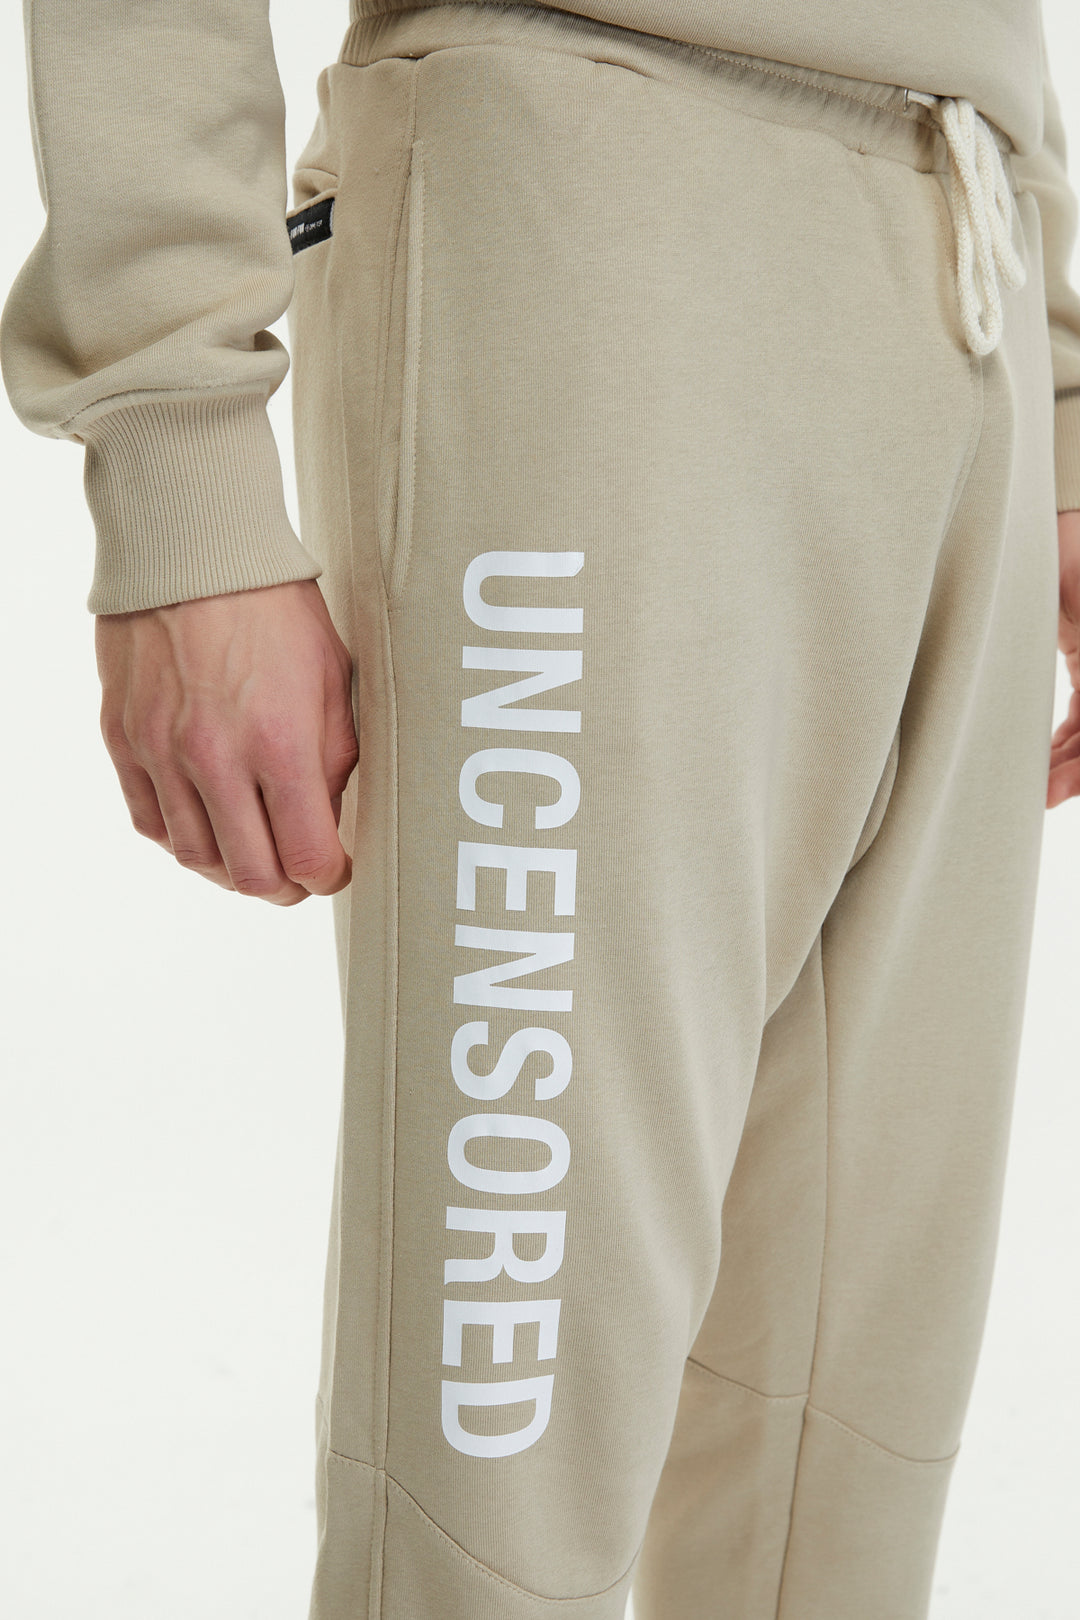 Uncensored / Unisex Sweatpants